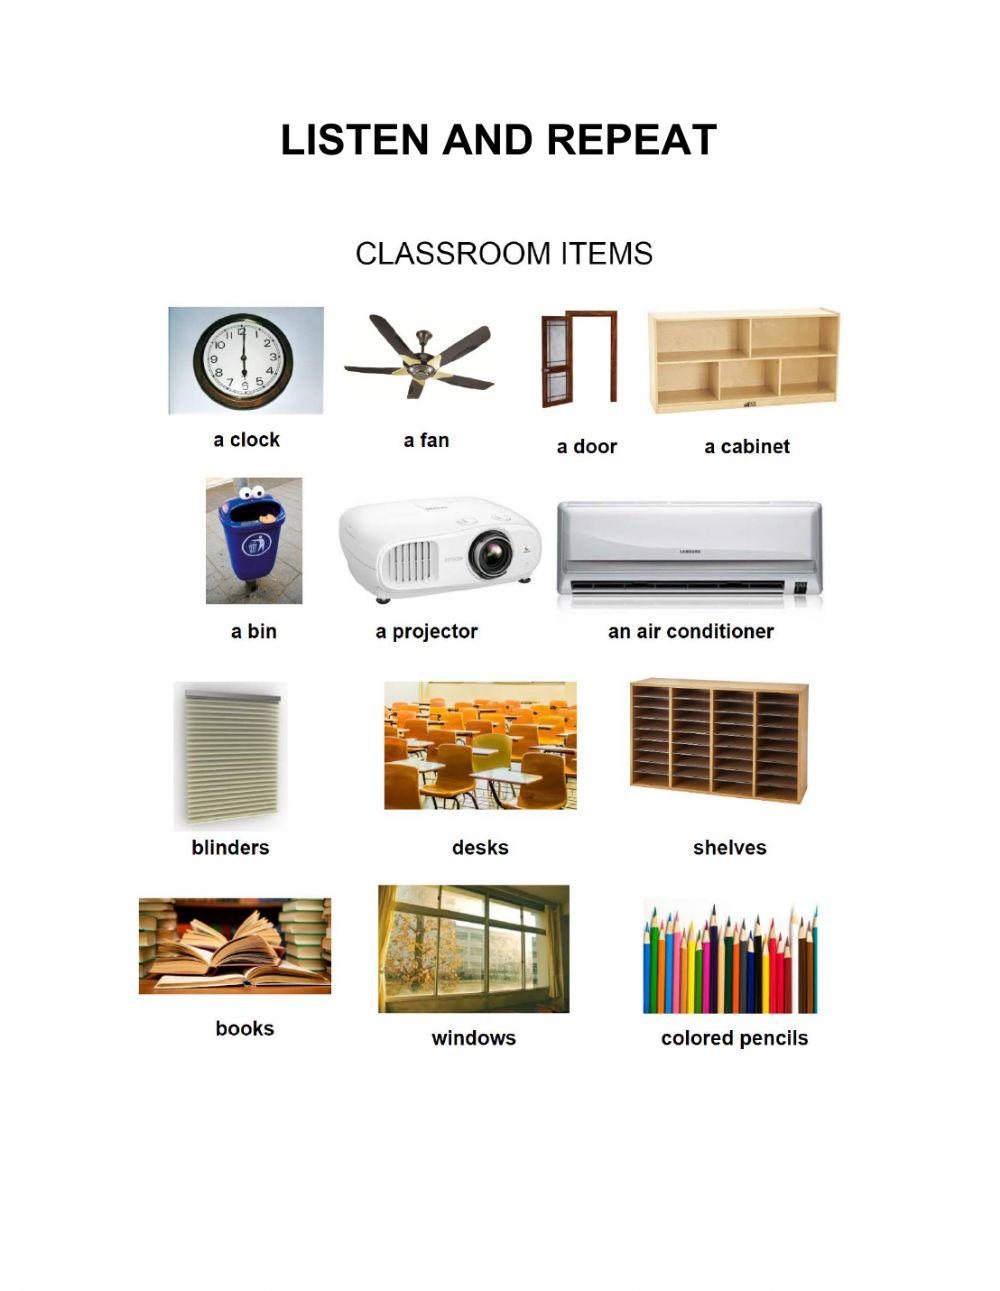 Classroom items